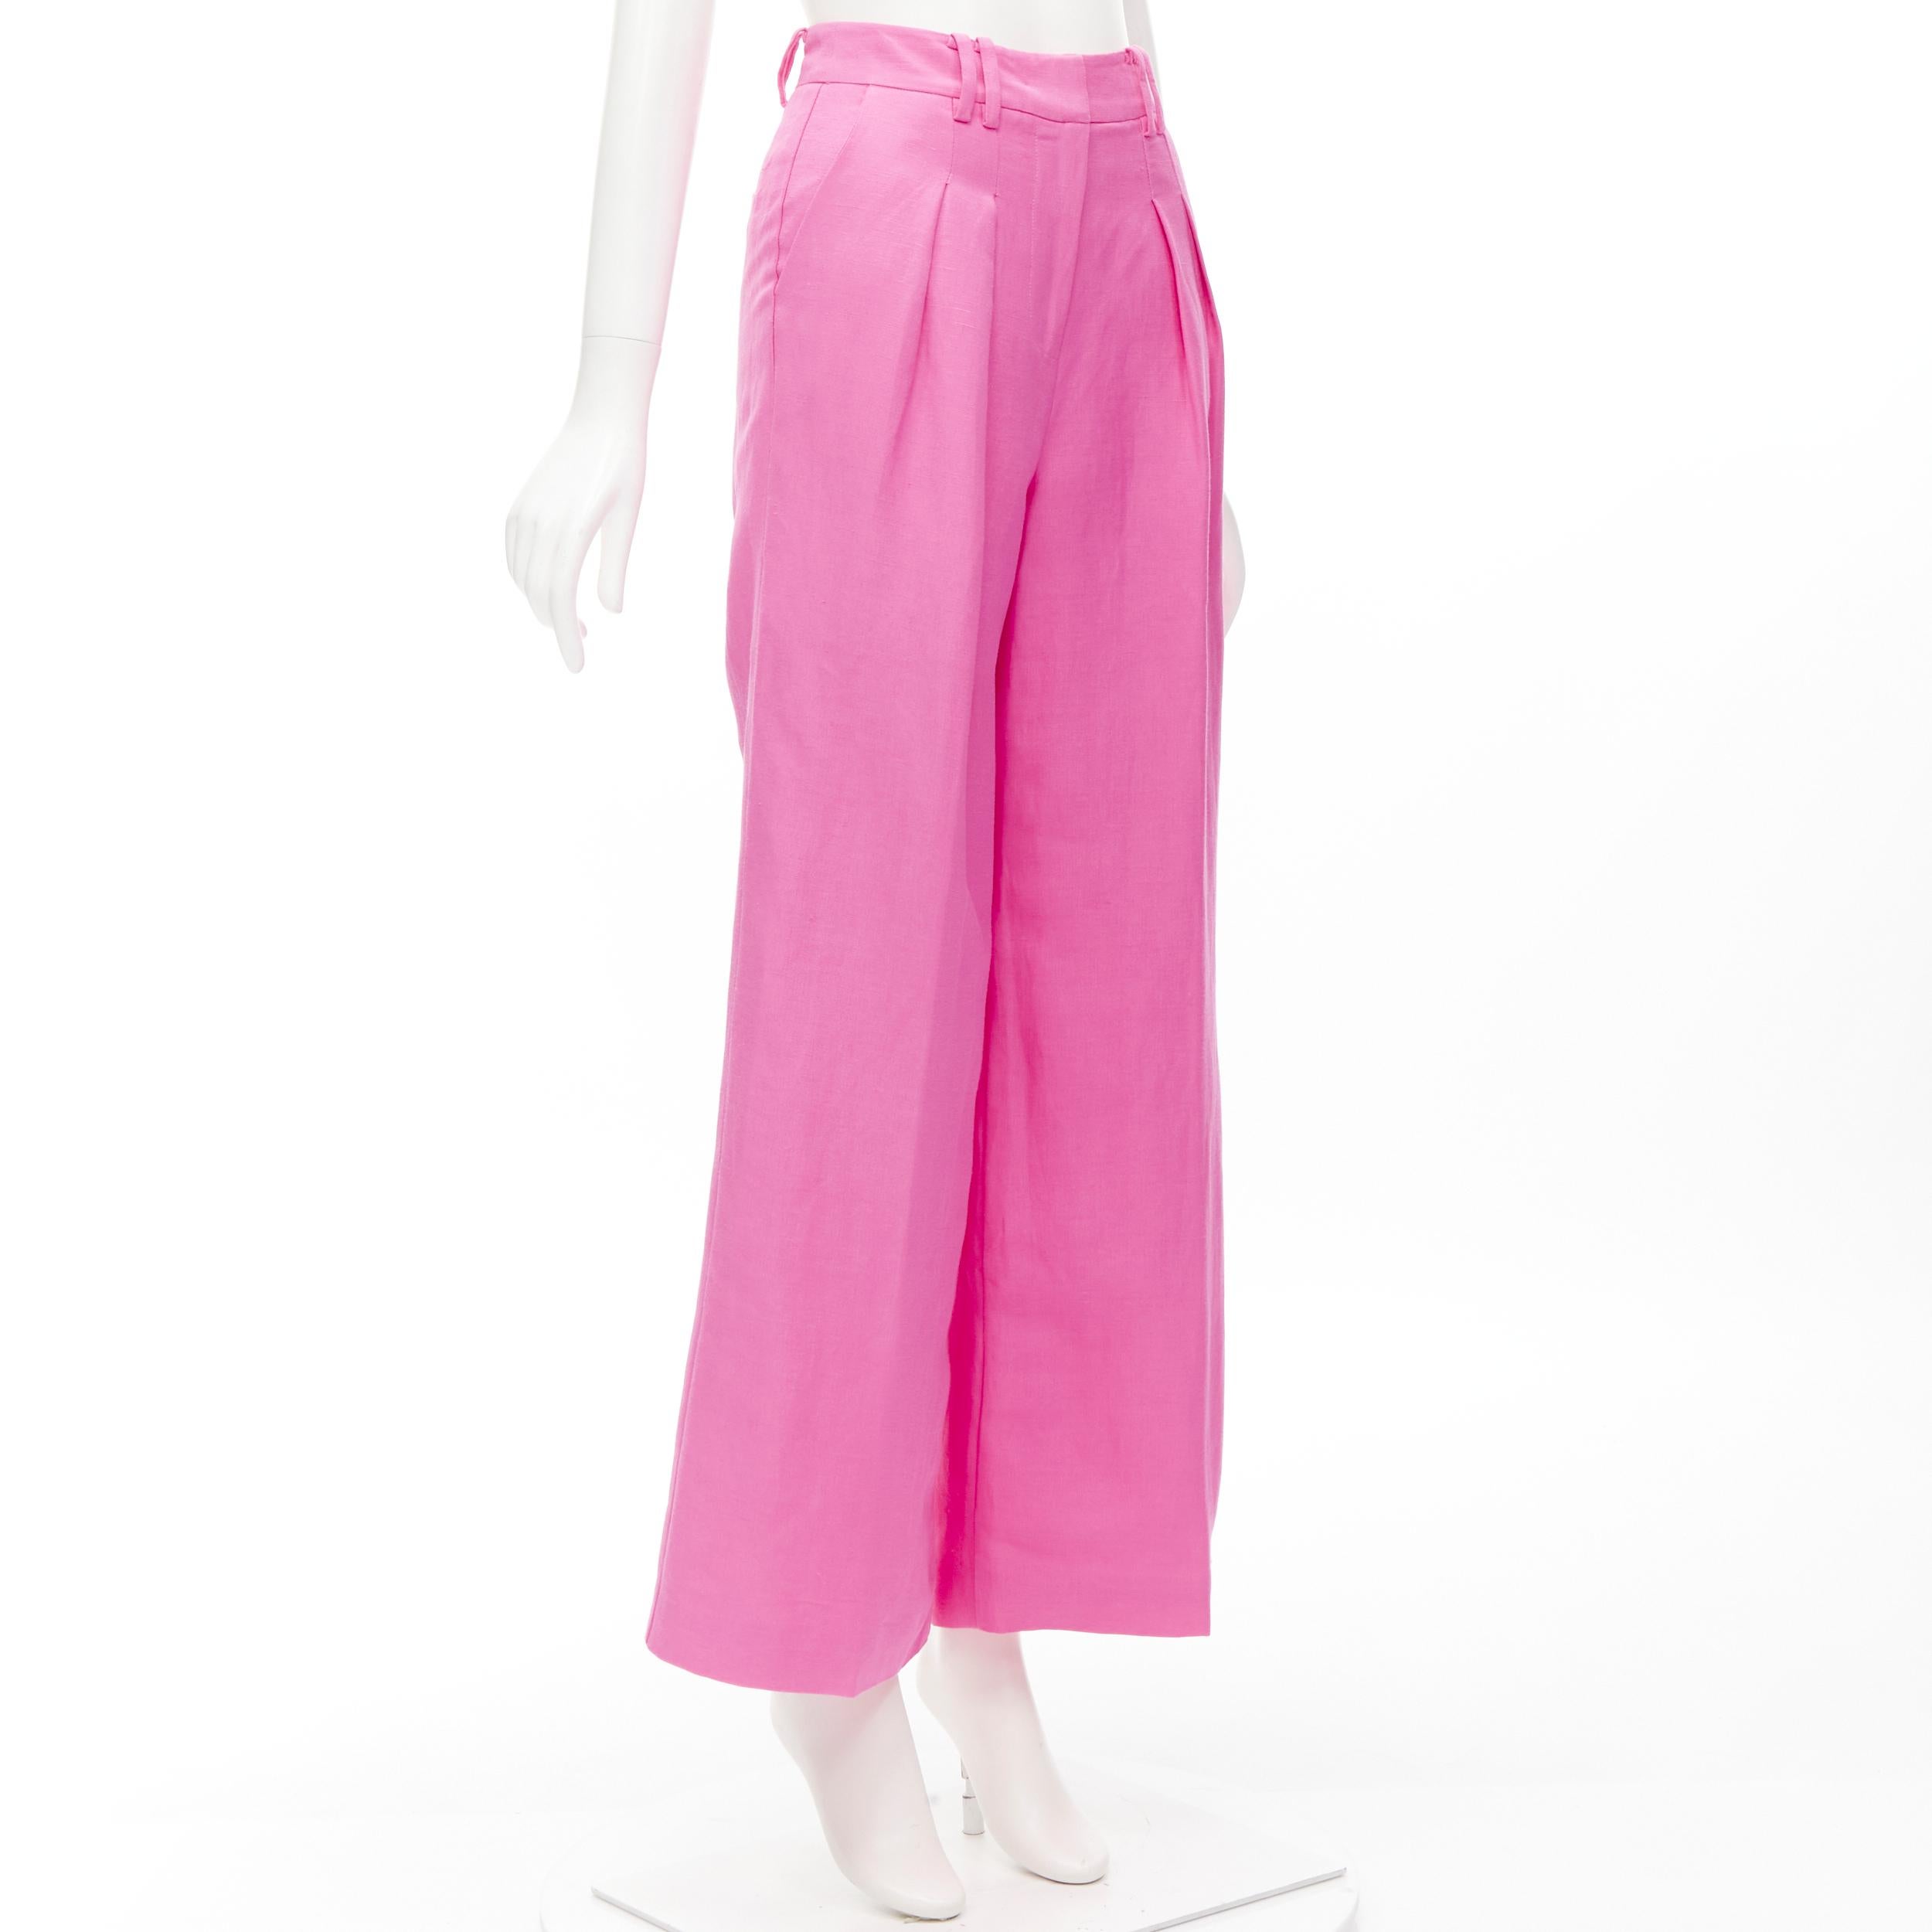 Rose AJE Vista pantalon large en rayonne de lin rose vif à plis AU6 XS